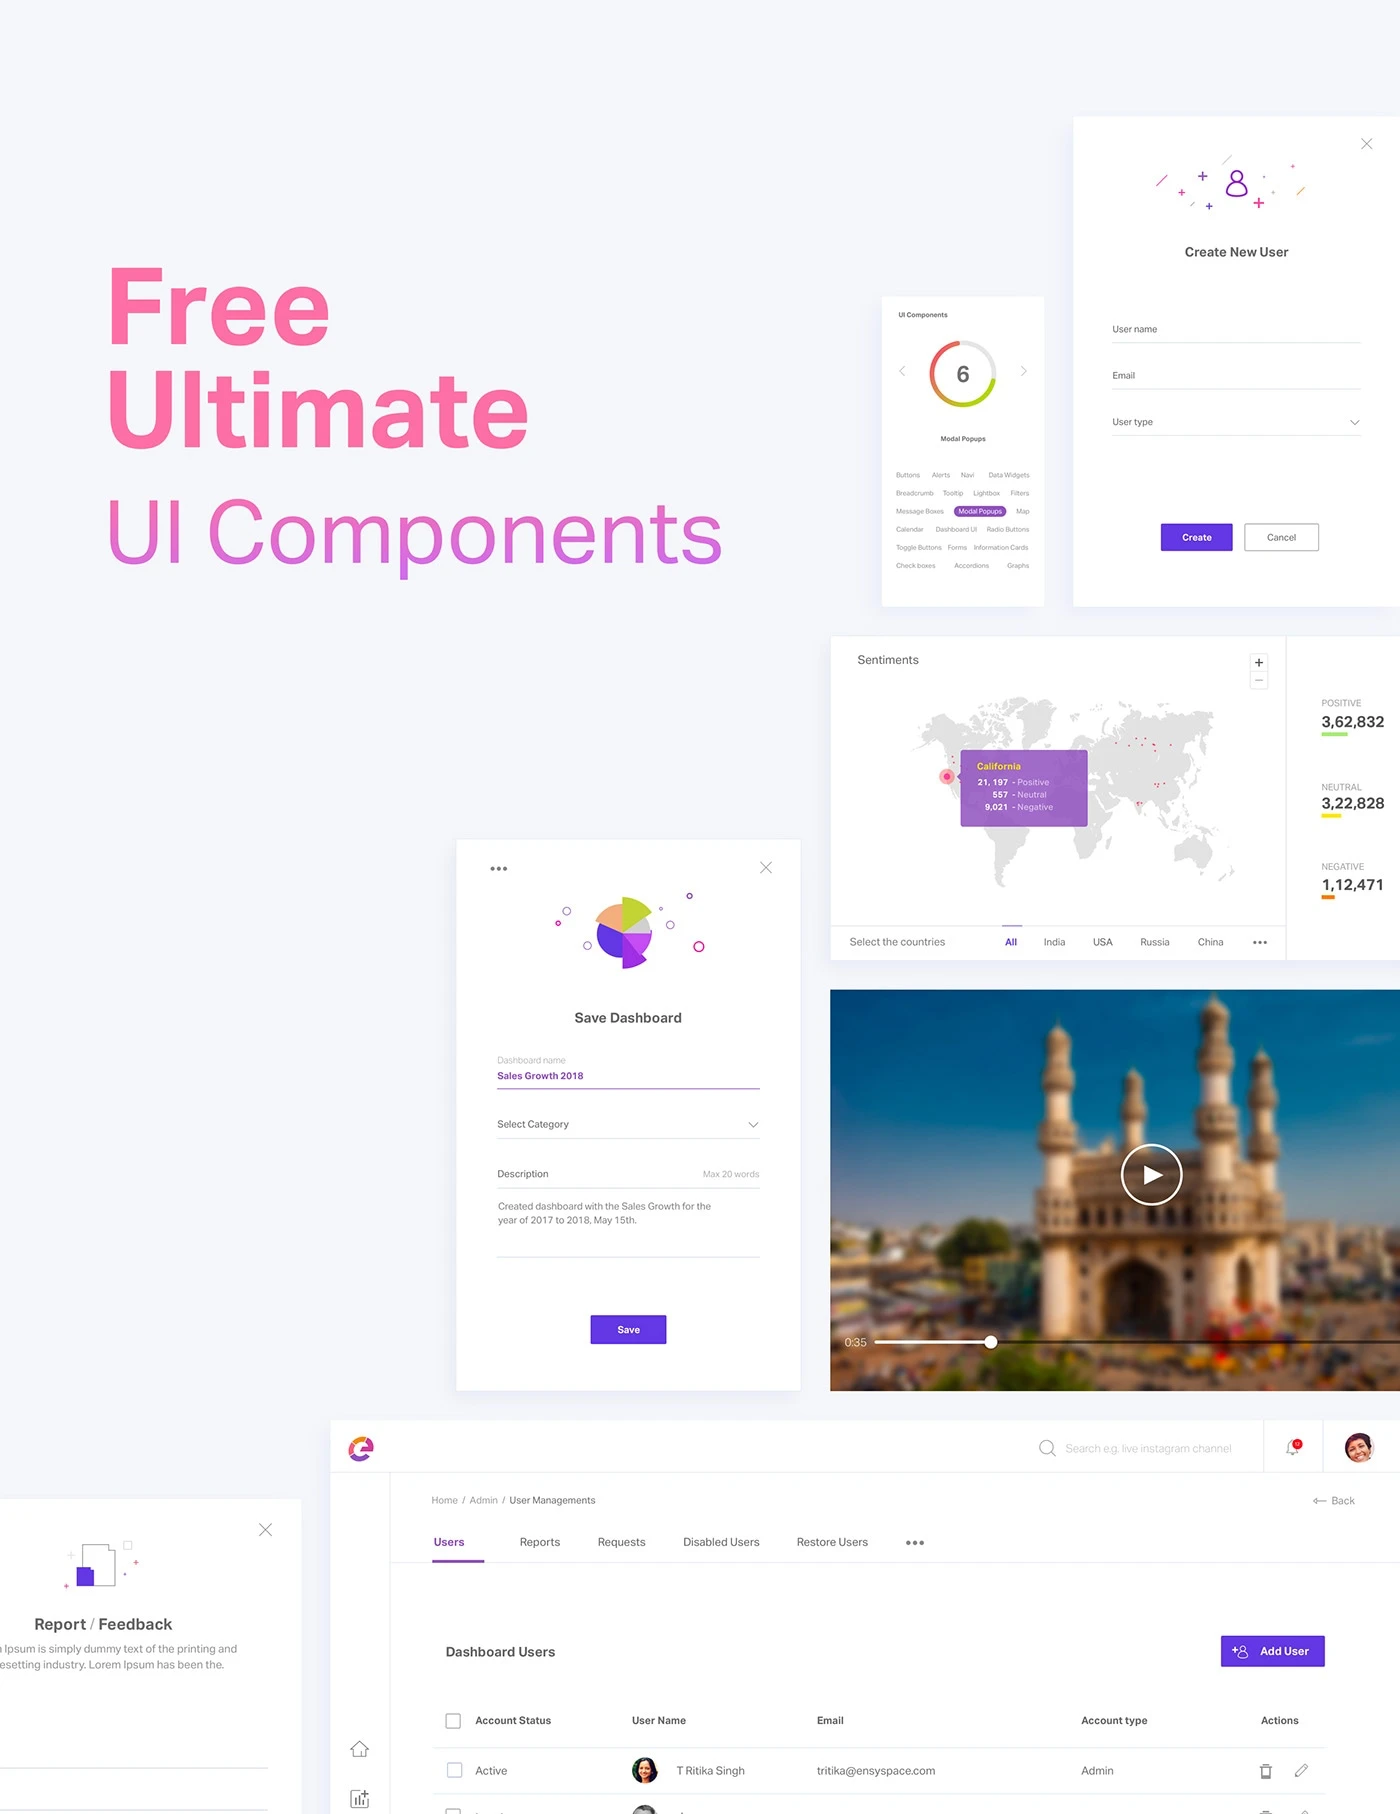 Free Ultimate UI Elements - Minimal and clean UI design